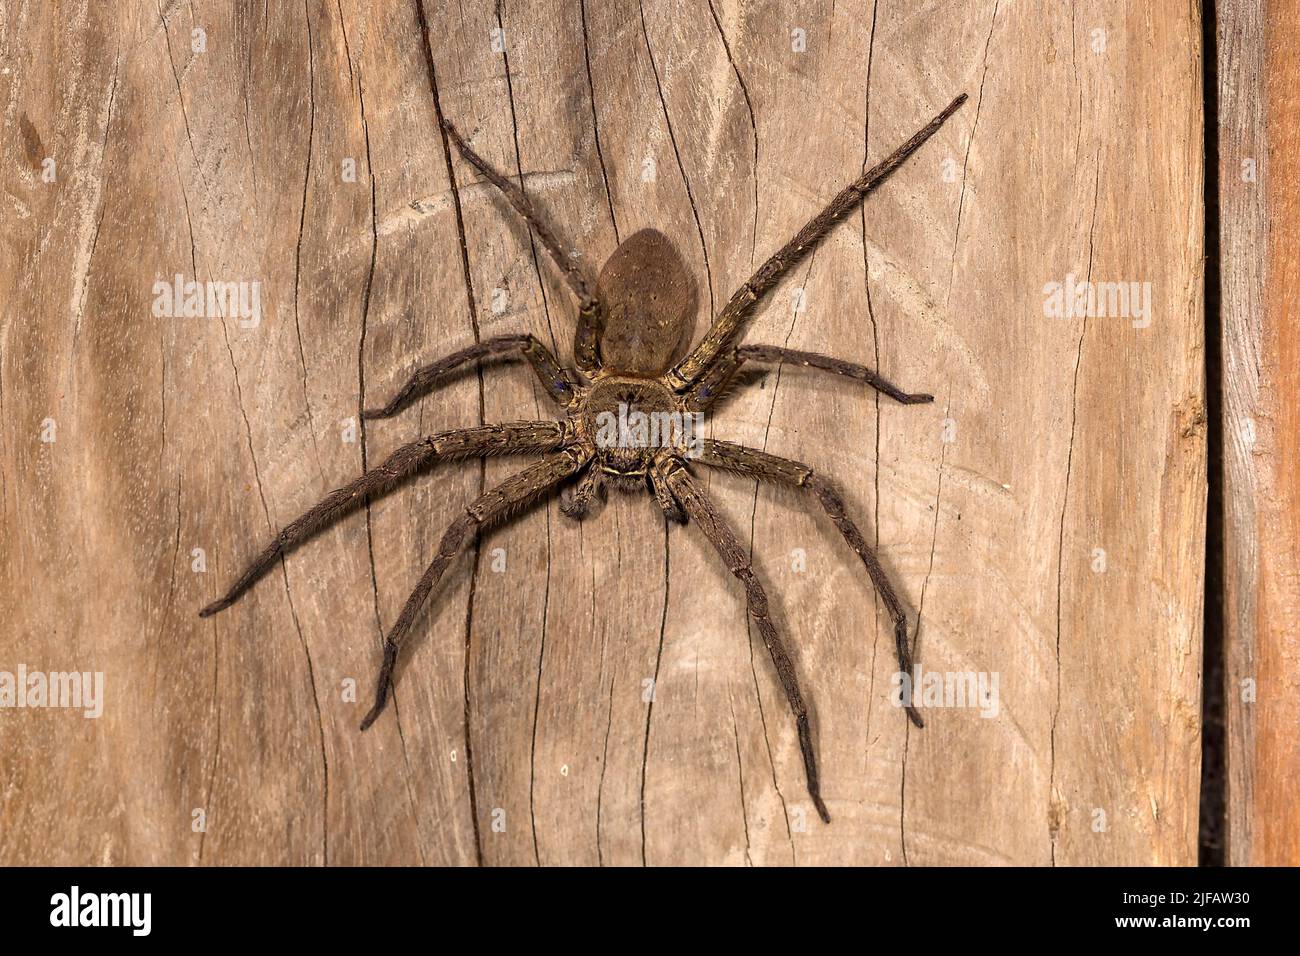 Huntsman spider (Heteropoda sp.?) from Komodo Island, Indonesia Stock Photo